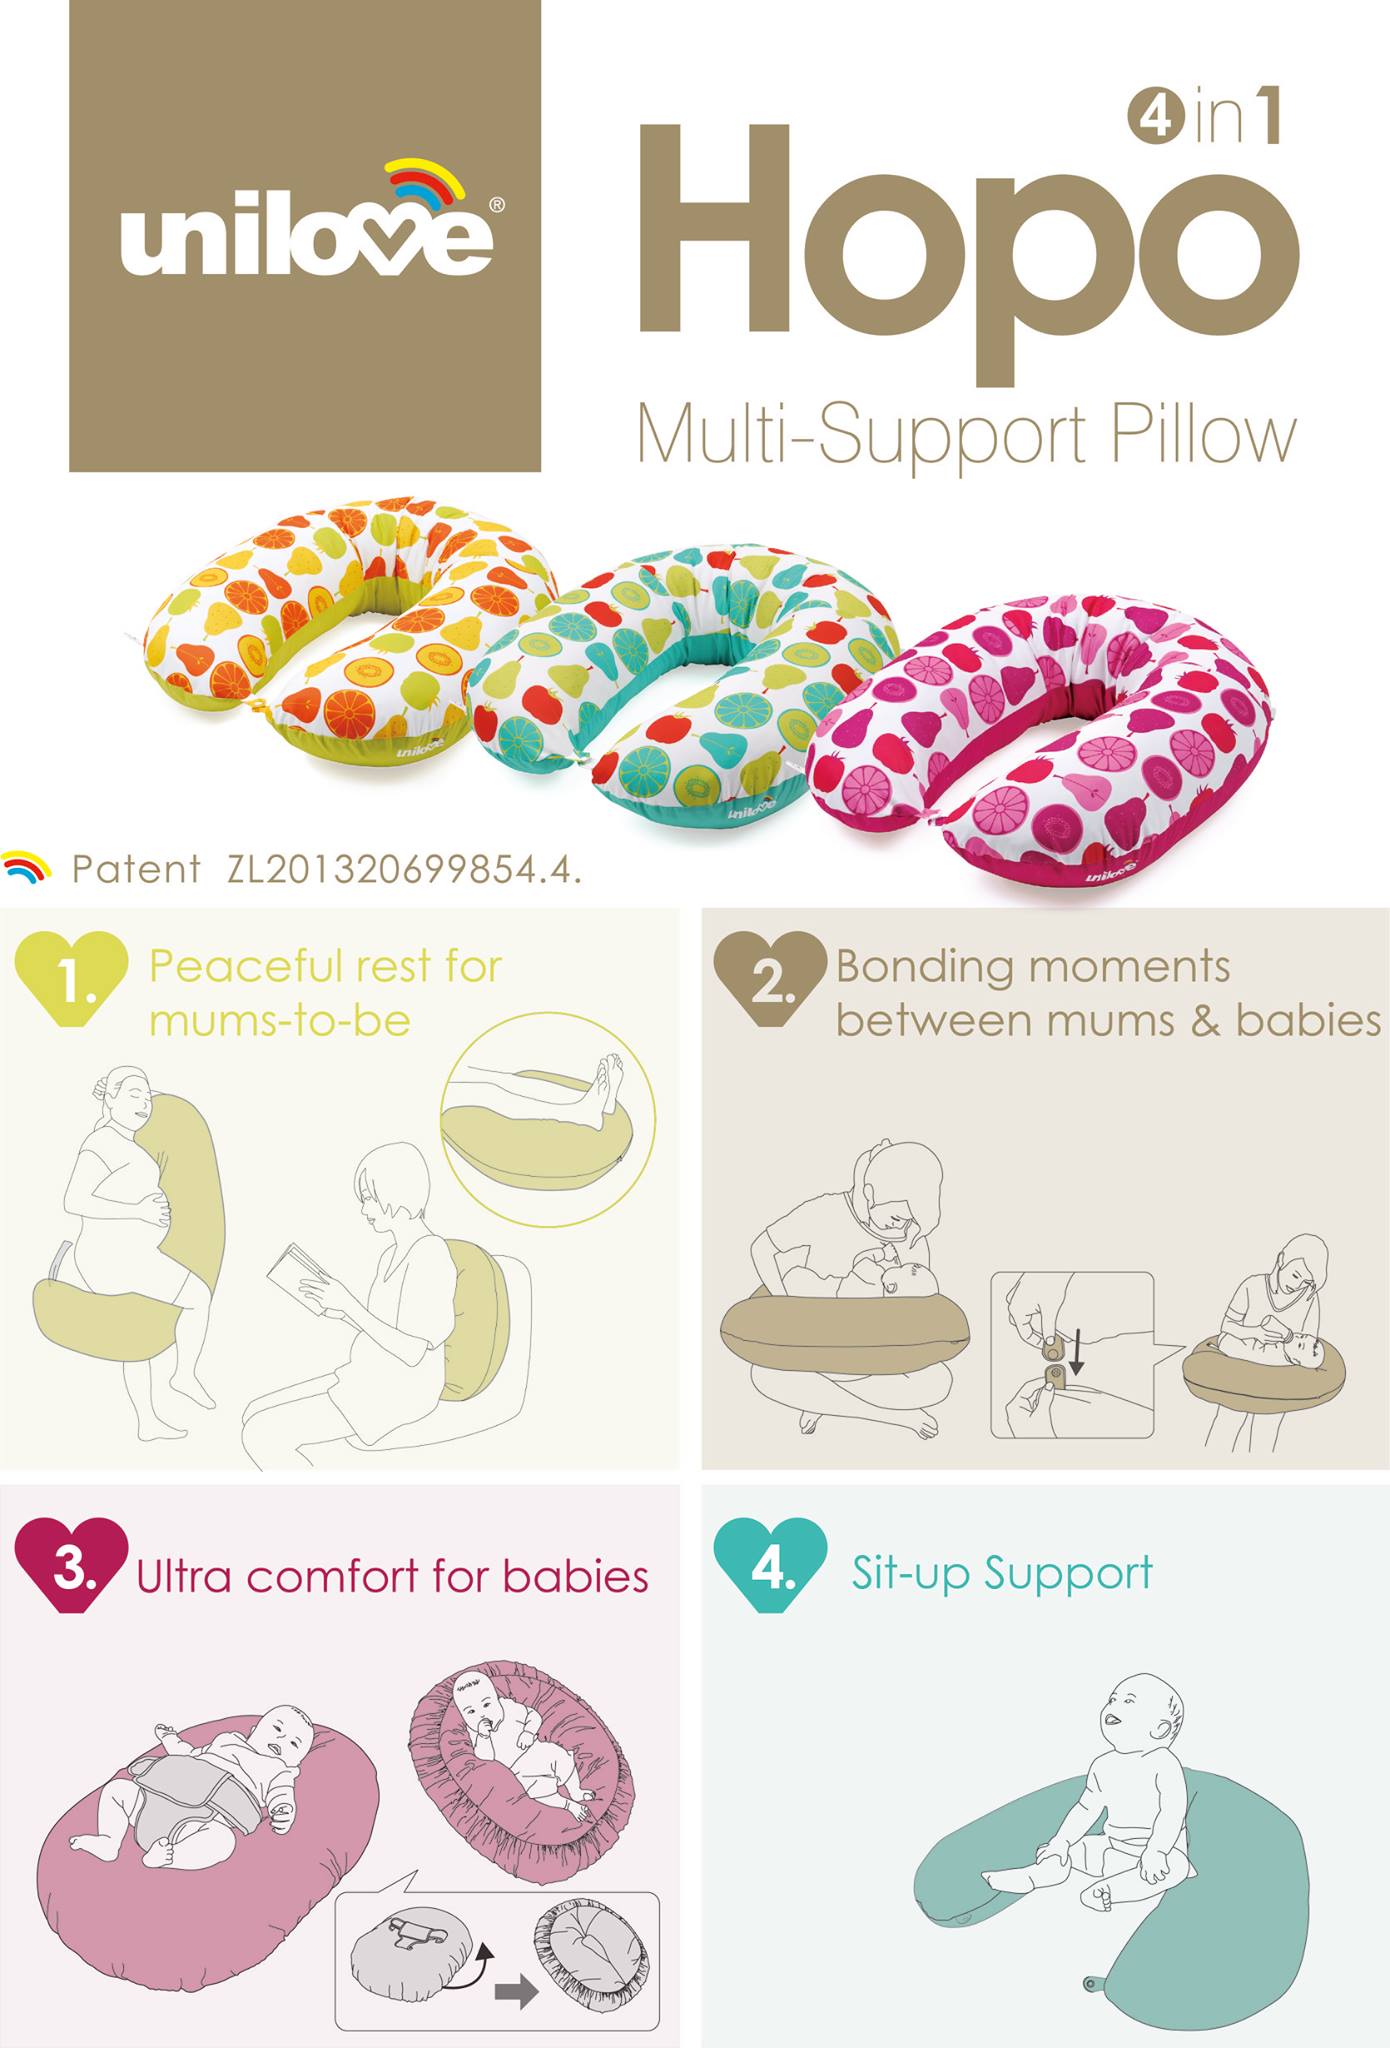 HOPO Multi-Support Pillow